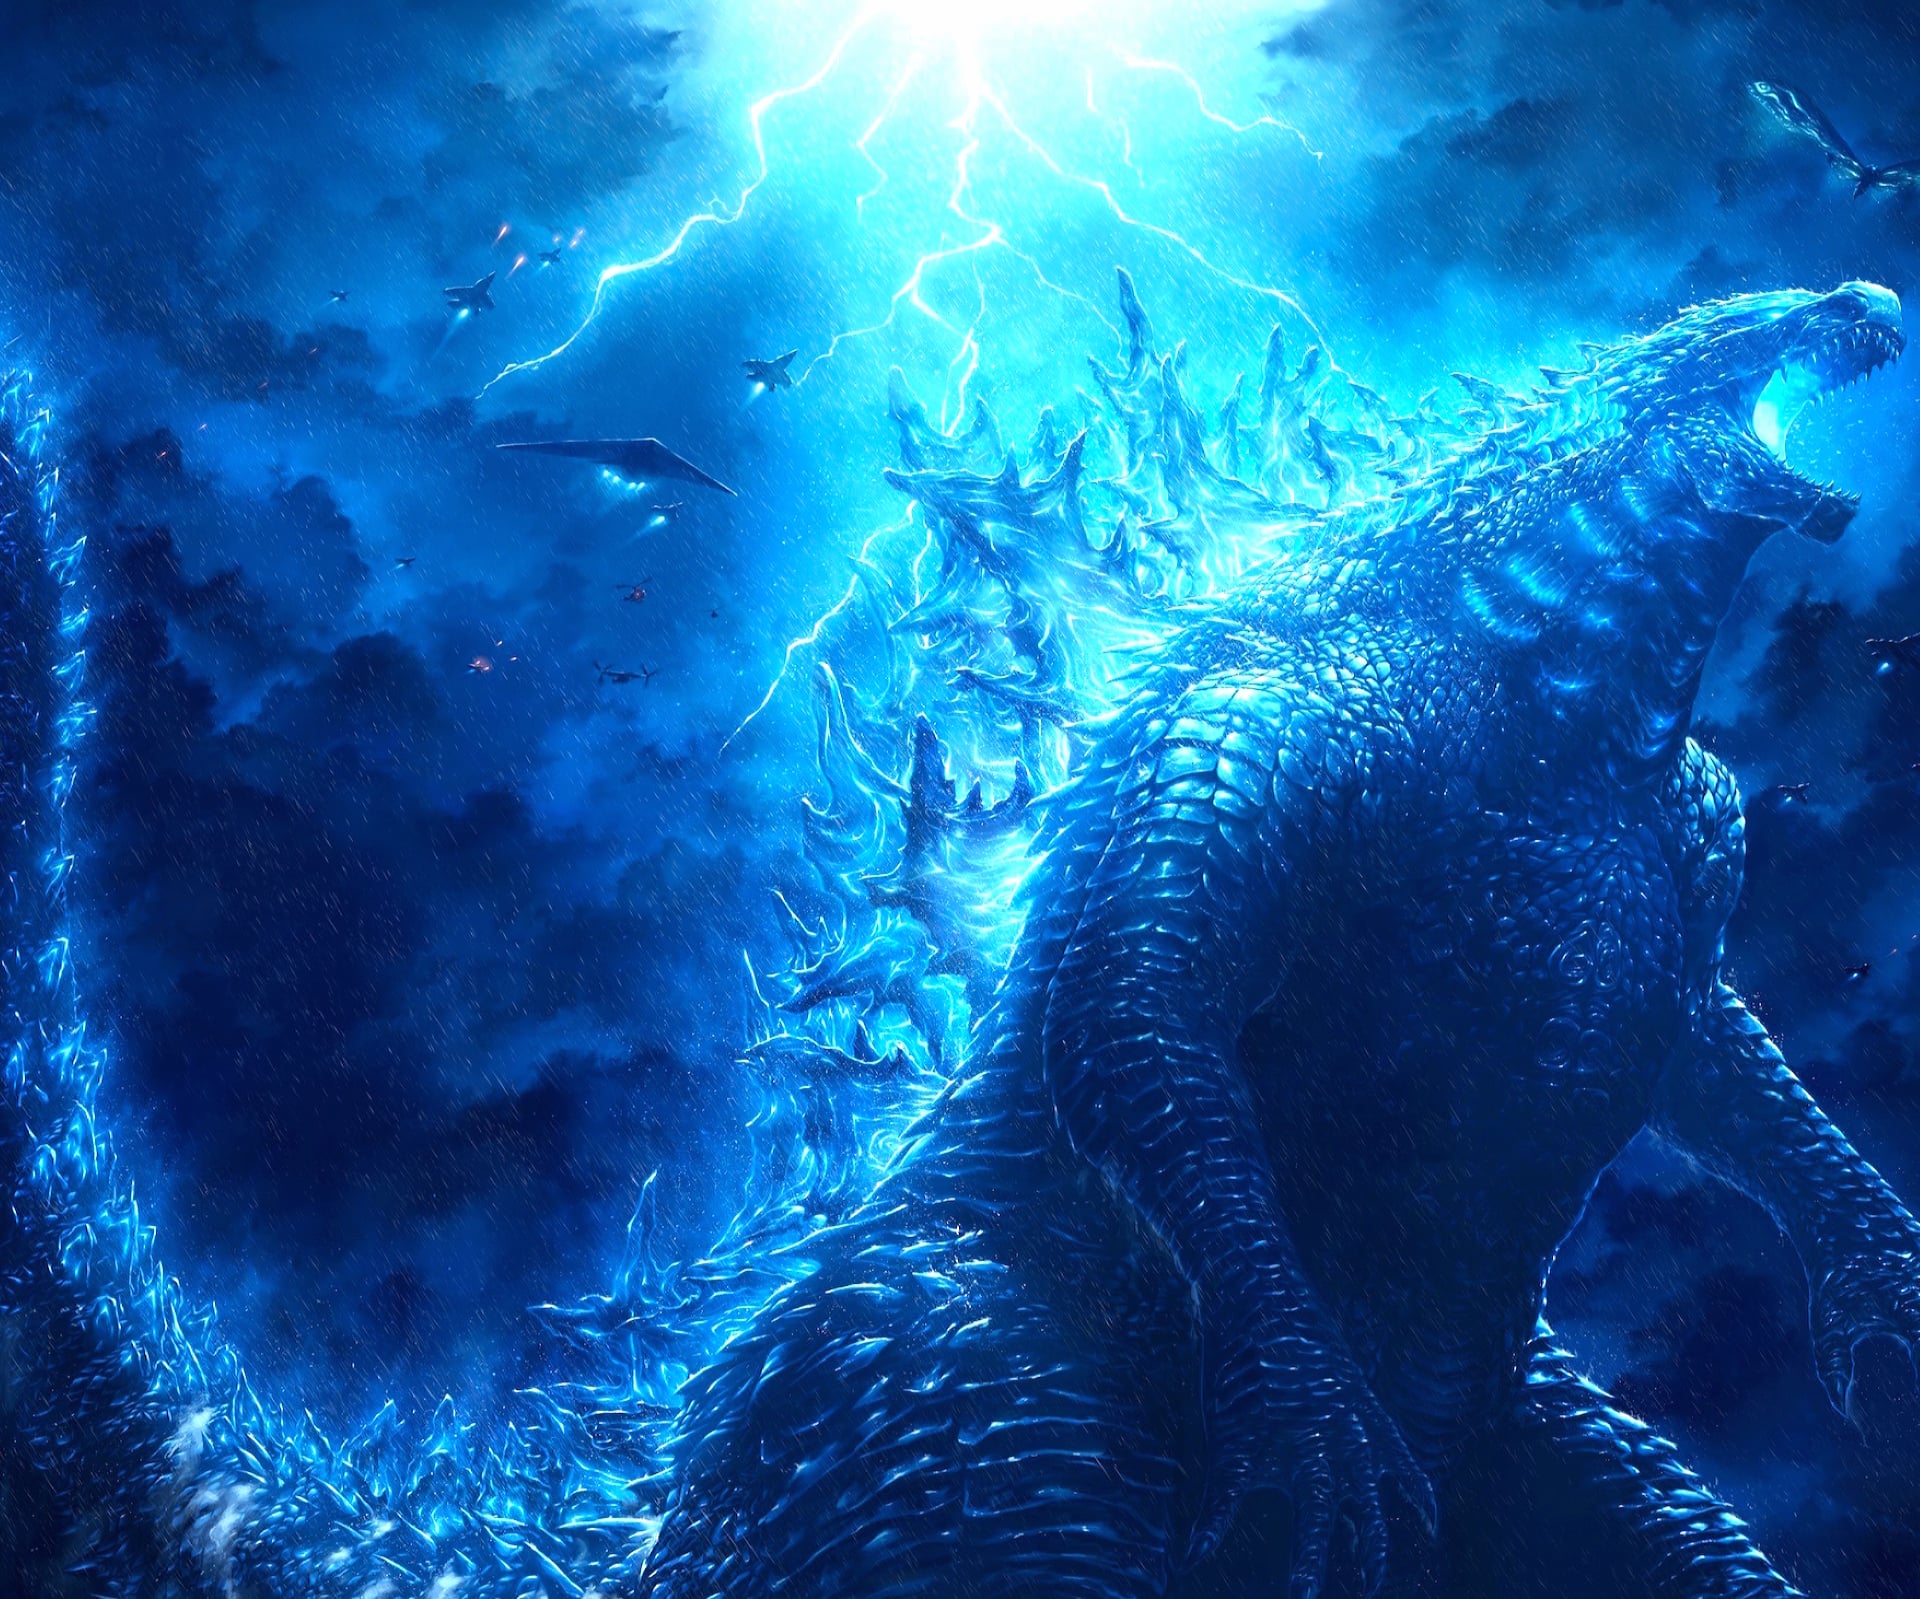 Fantasy Godzilla at 1600 x 1200 size wallpapers HD quality